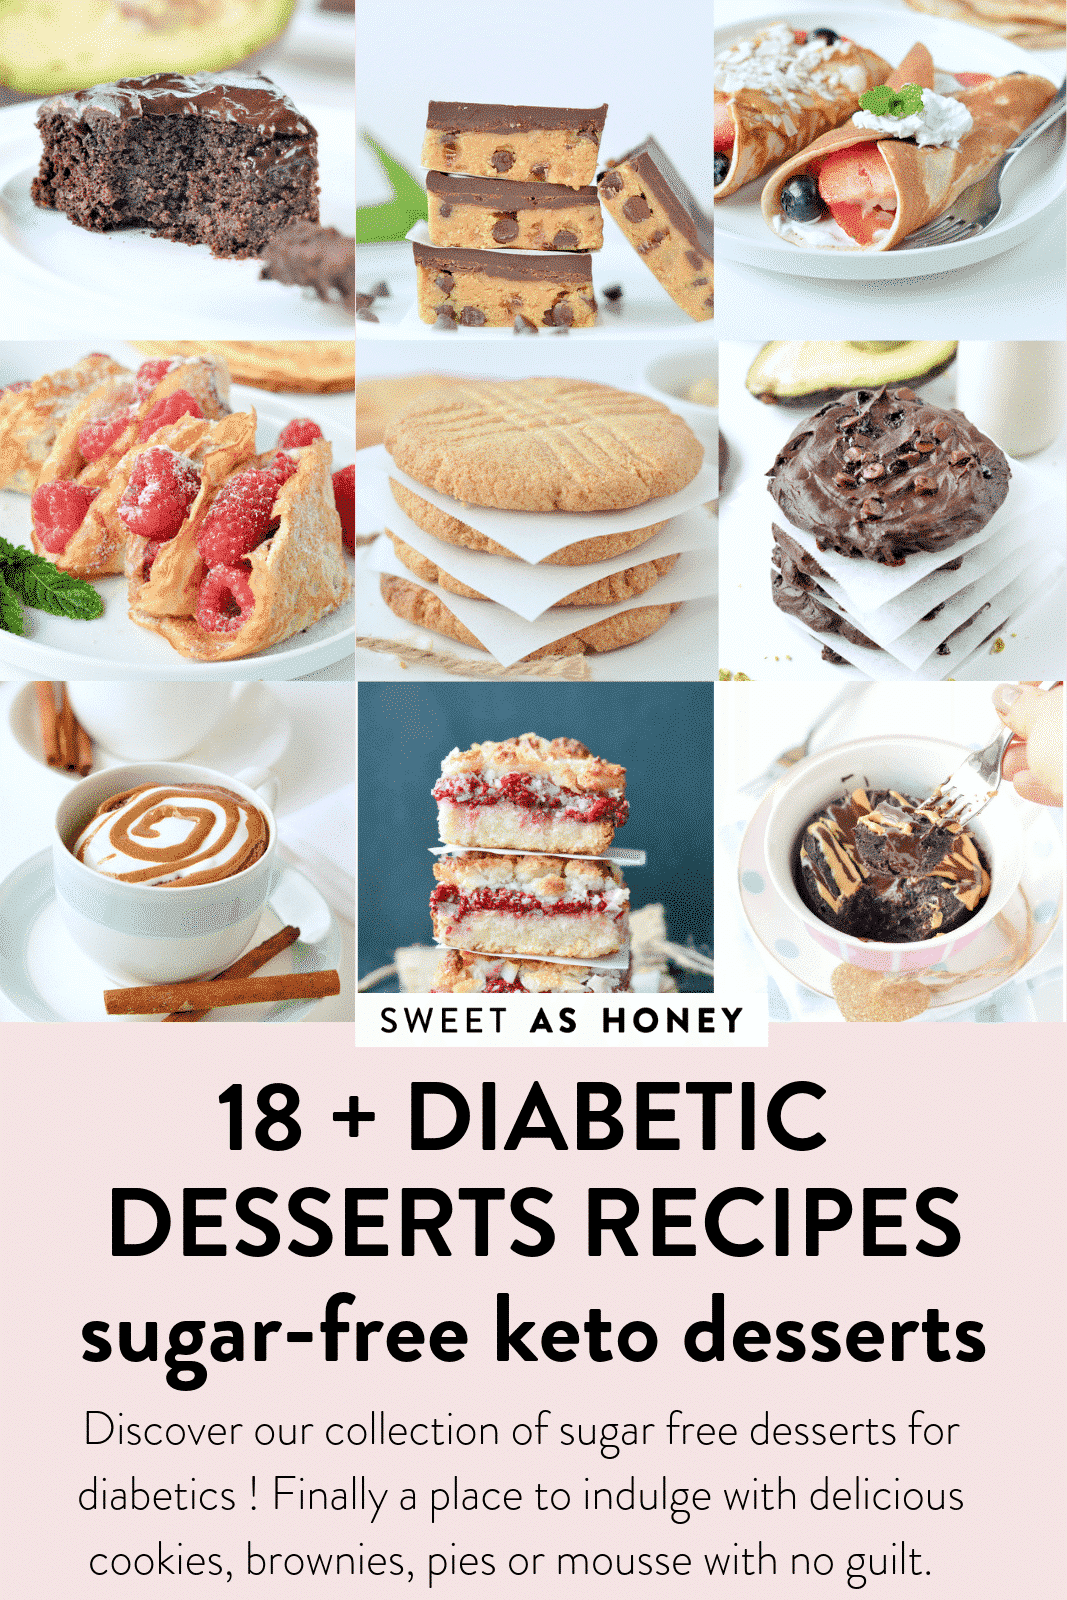 30+ Sugar Free Dessert Recipes for Diabetics - Sweetashoney